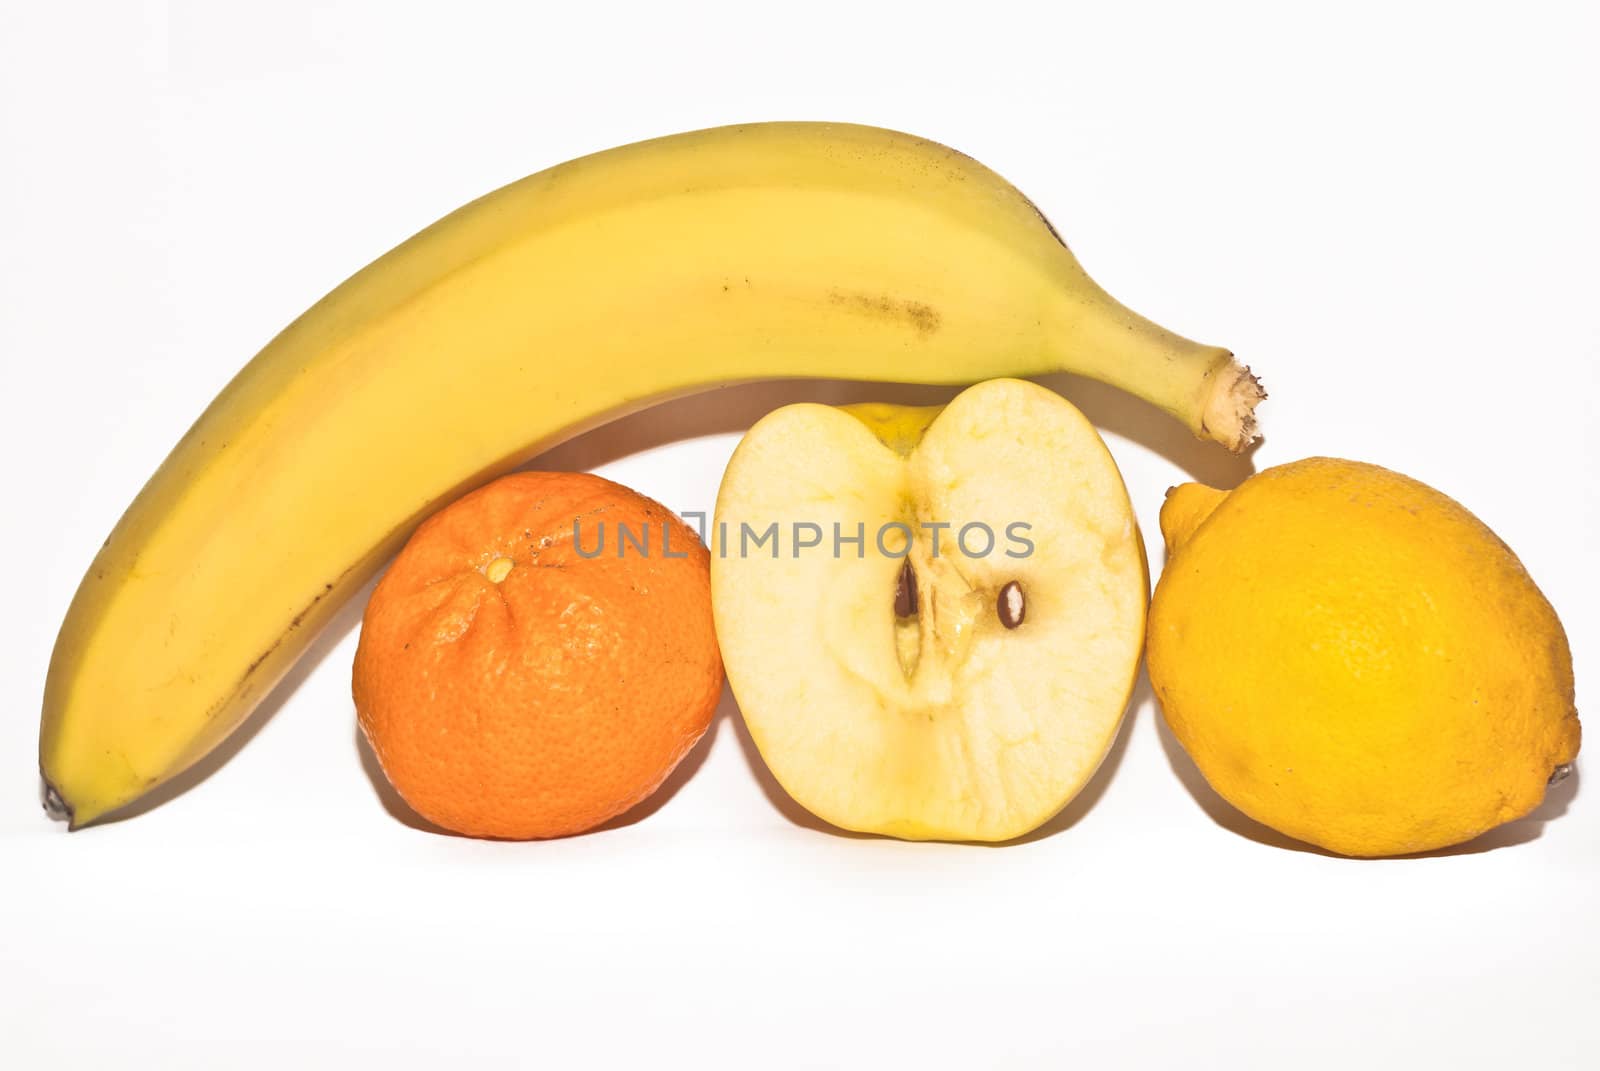 Fruits on white background by gandolfocannatella